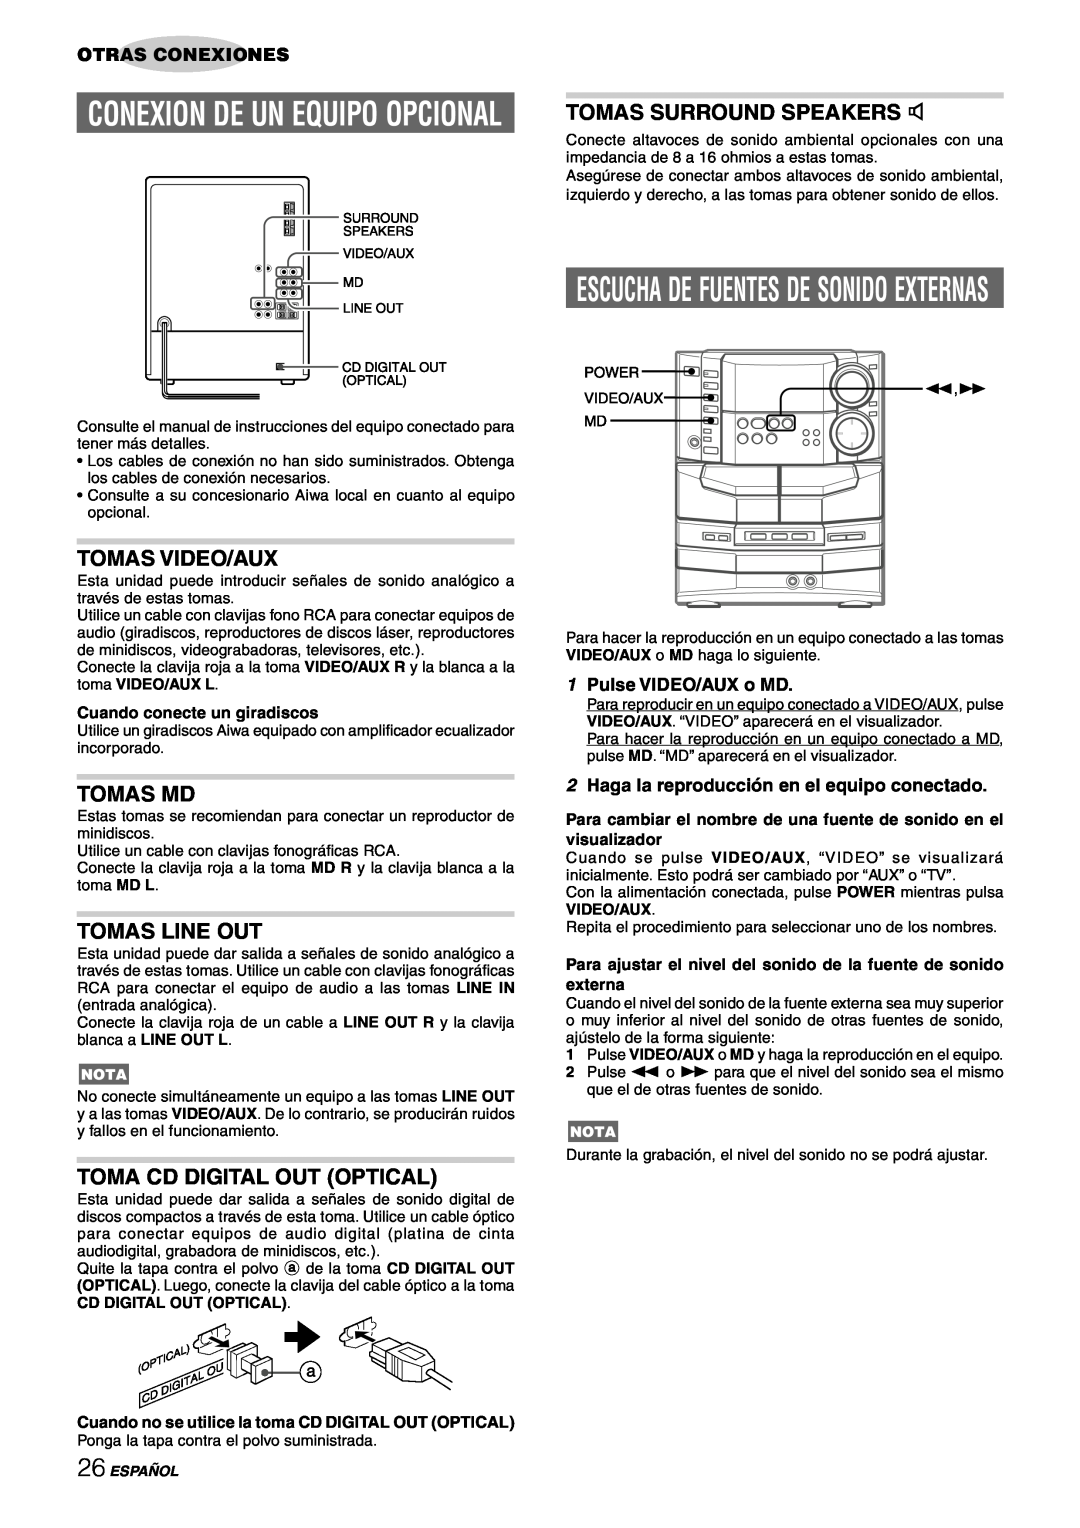 Sony NSX-AJ80 manual Conexion De Un Equipo Opcional, Tomas Video/Aux, Tomas Md, Tomas Line Out, Toma Cd Digital Out Optical 